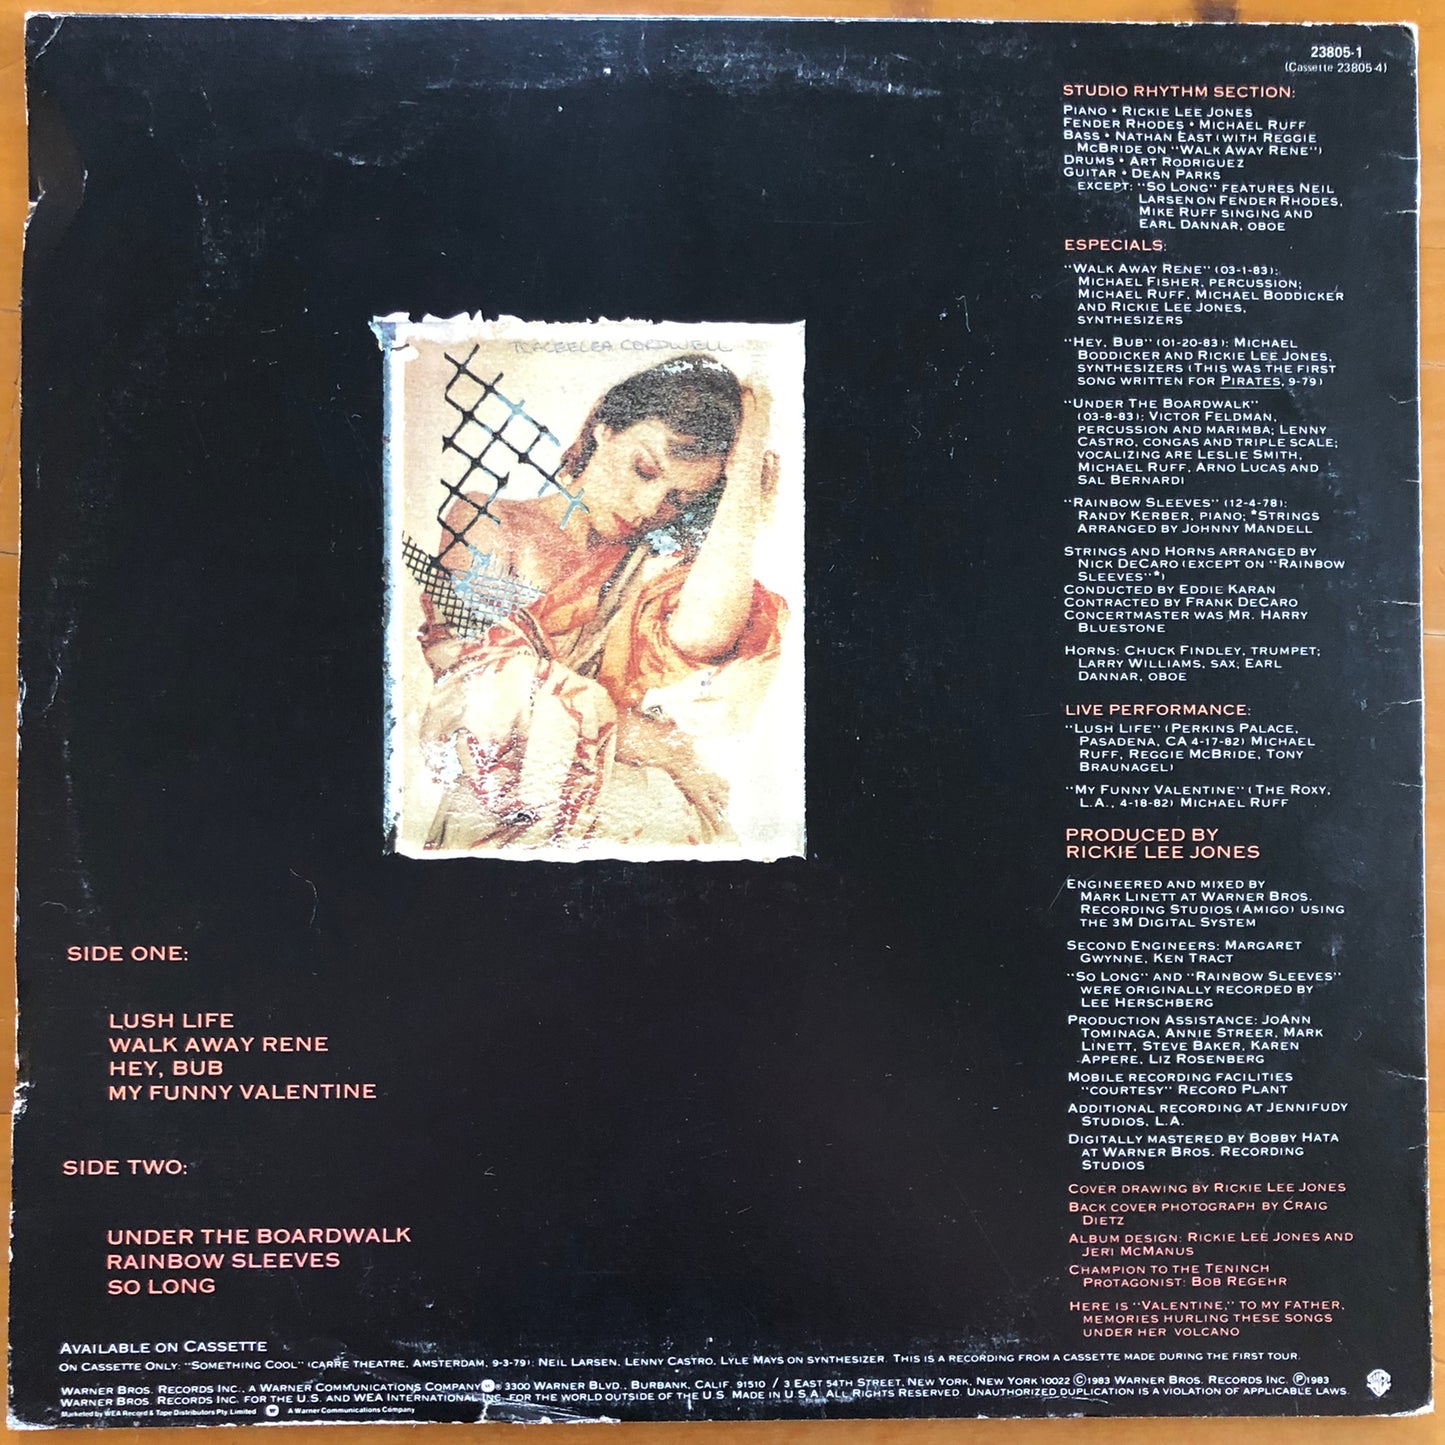 Rickie Lee Jones - Girl At Her Volcano (12" EP)